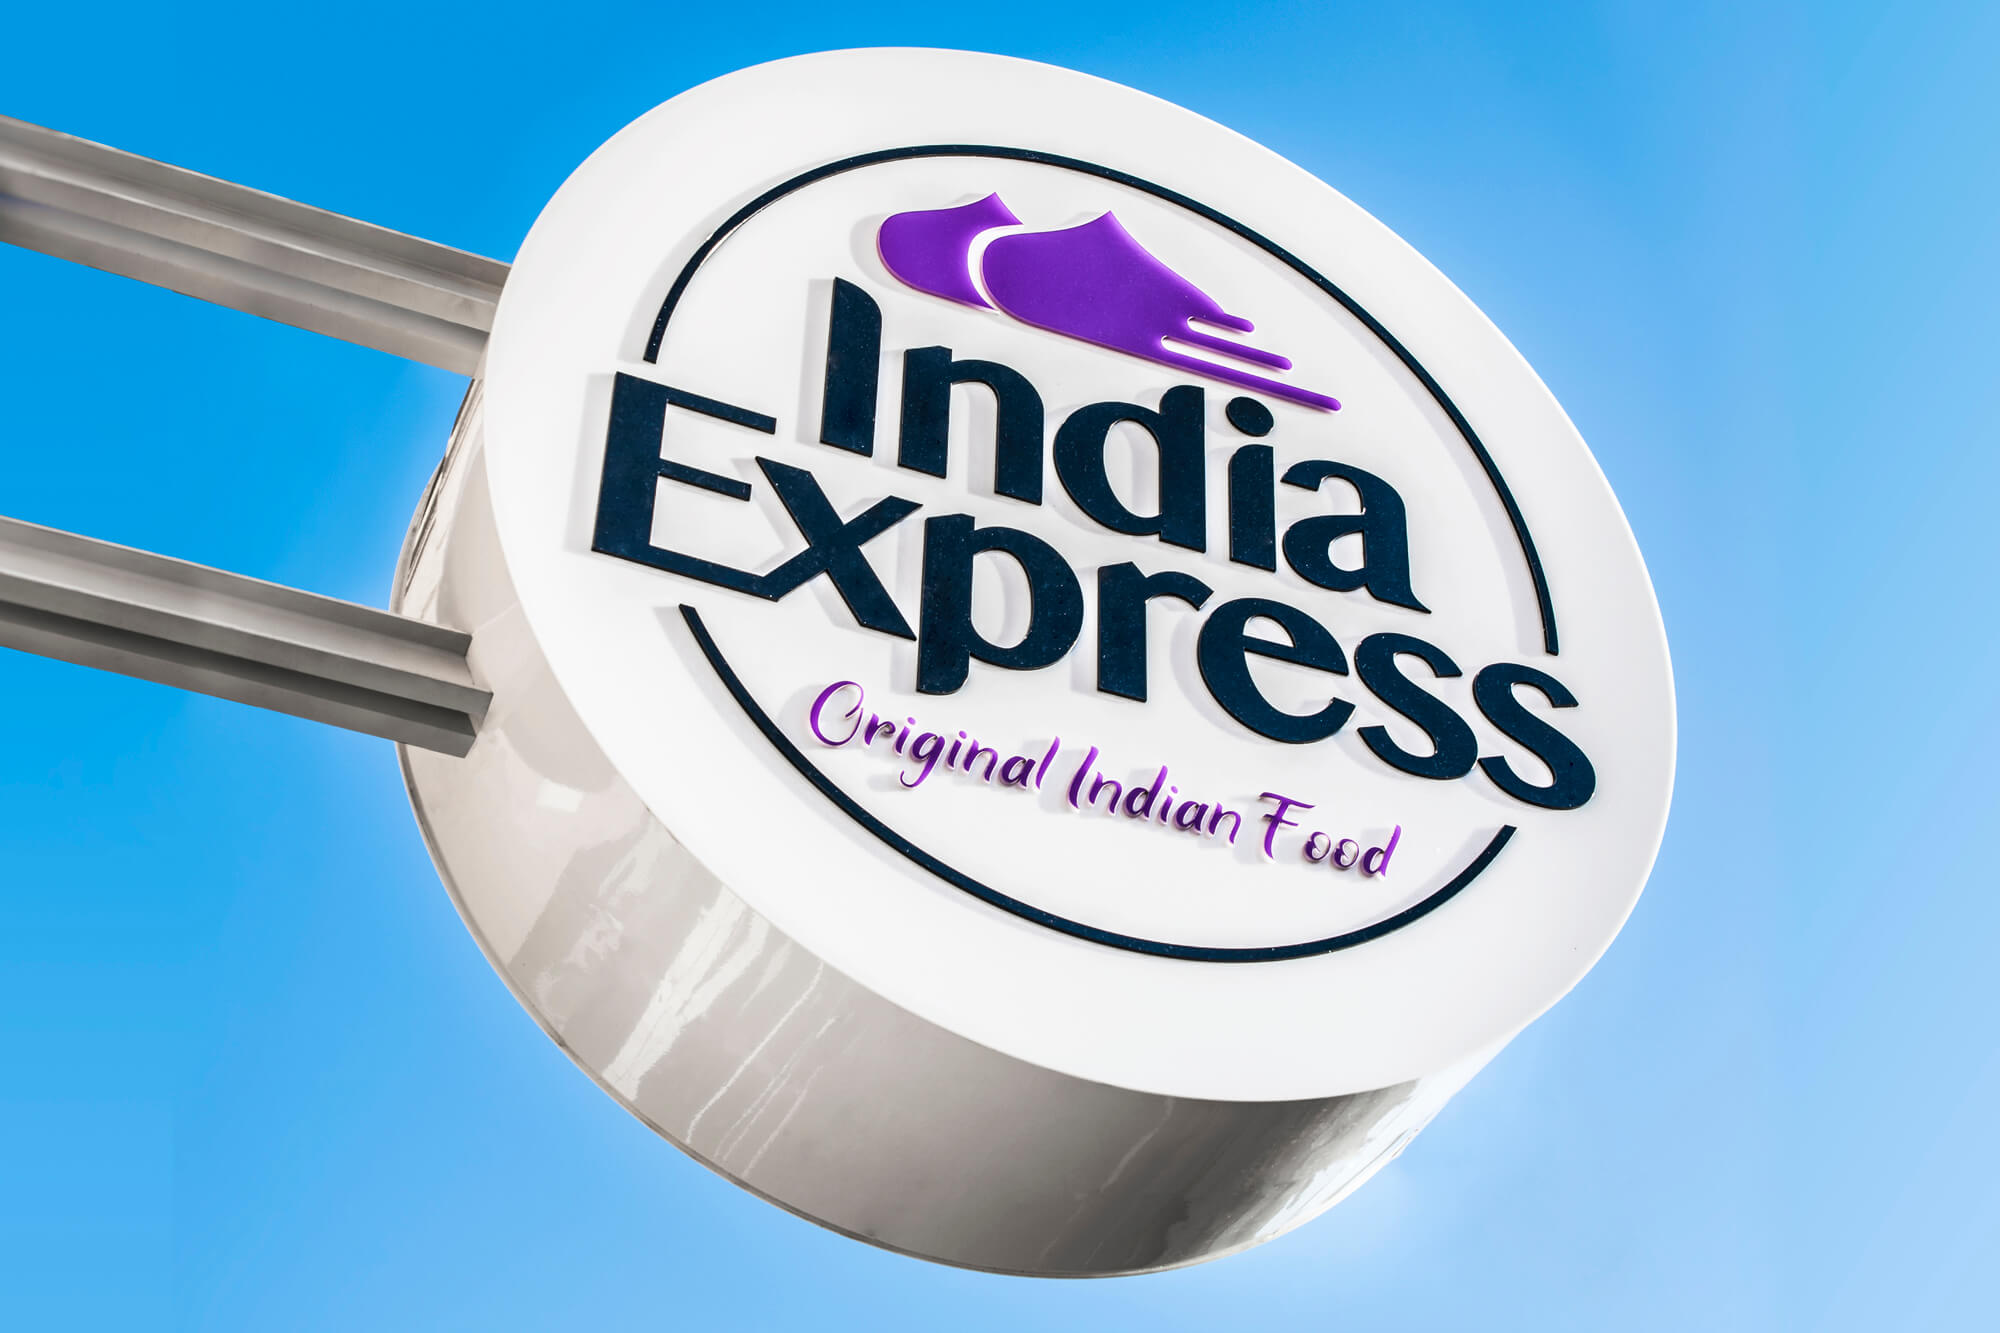 India Express - India Express - company logo advertising semaphore hung next to the entrance